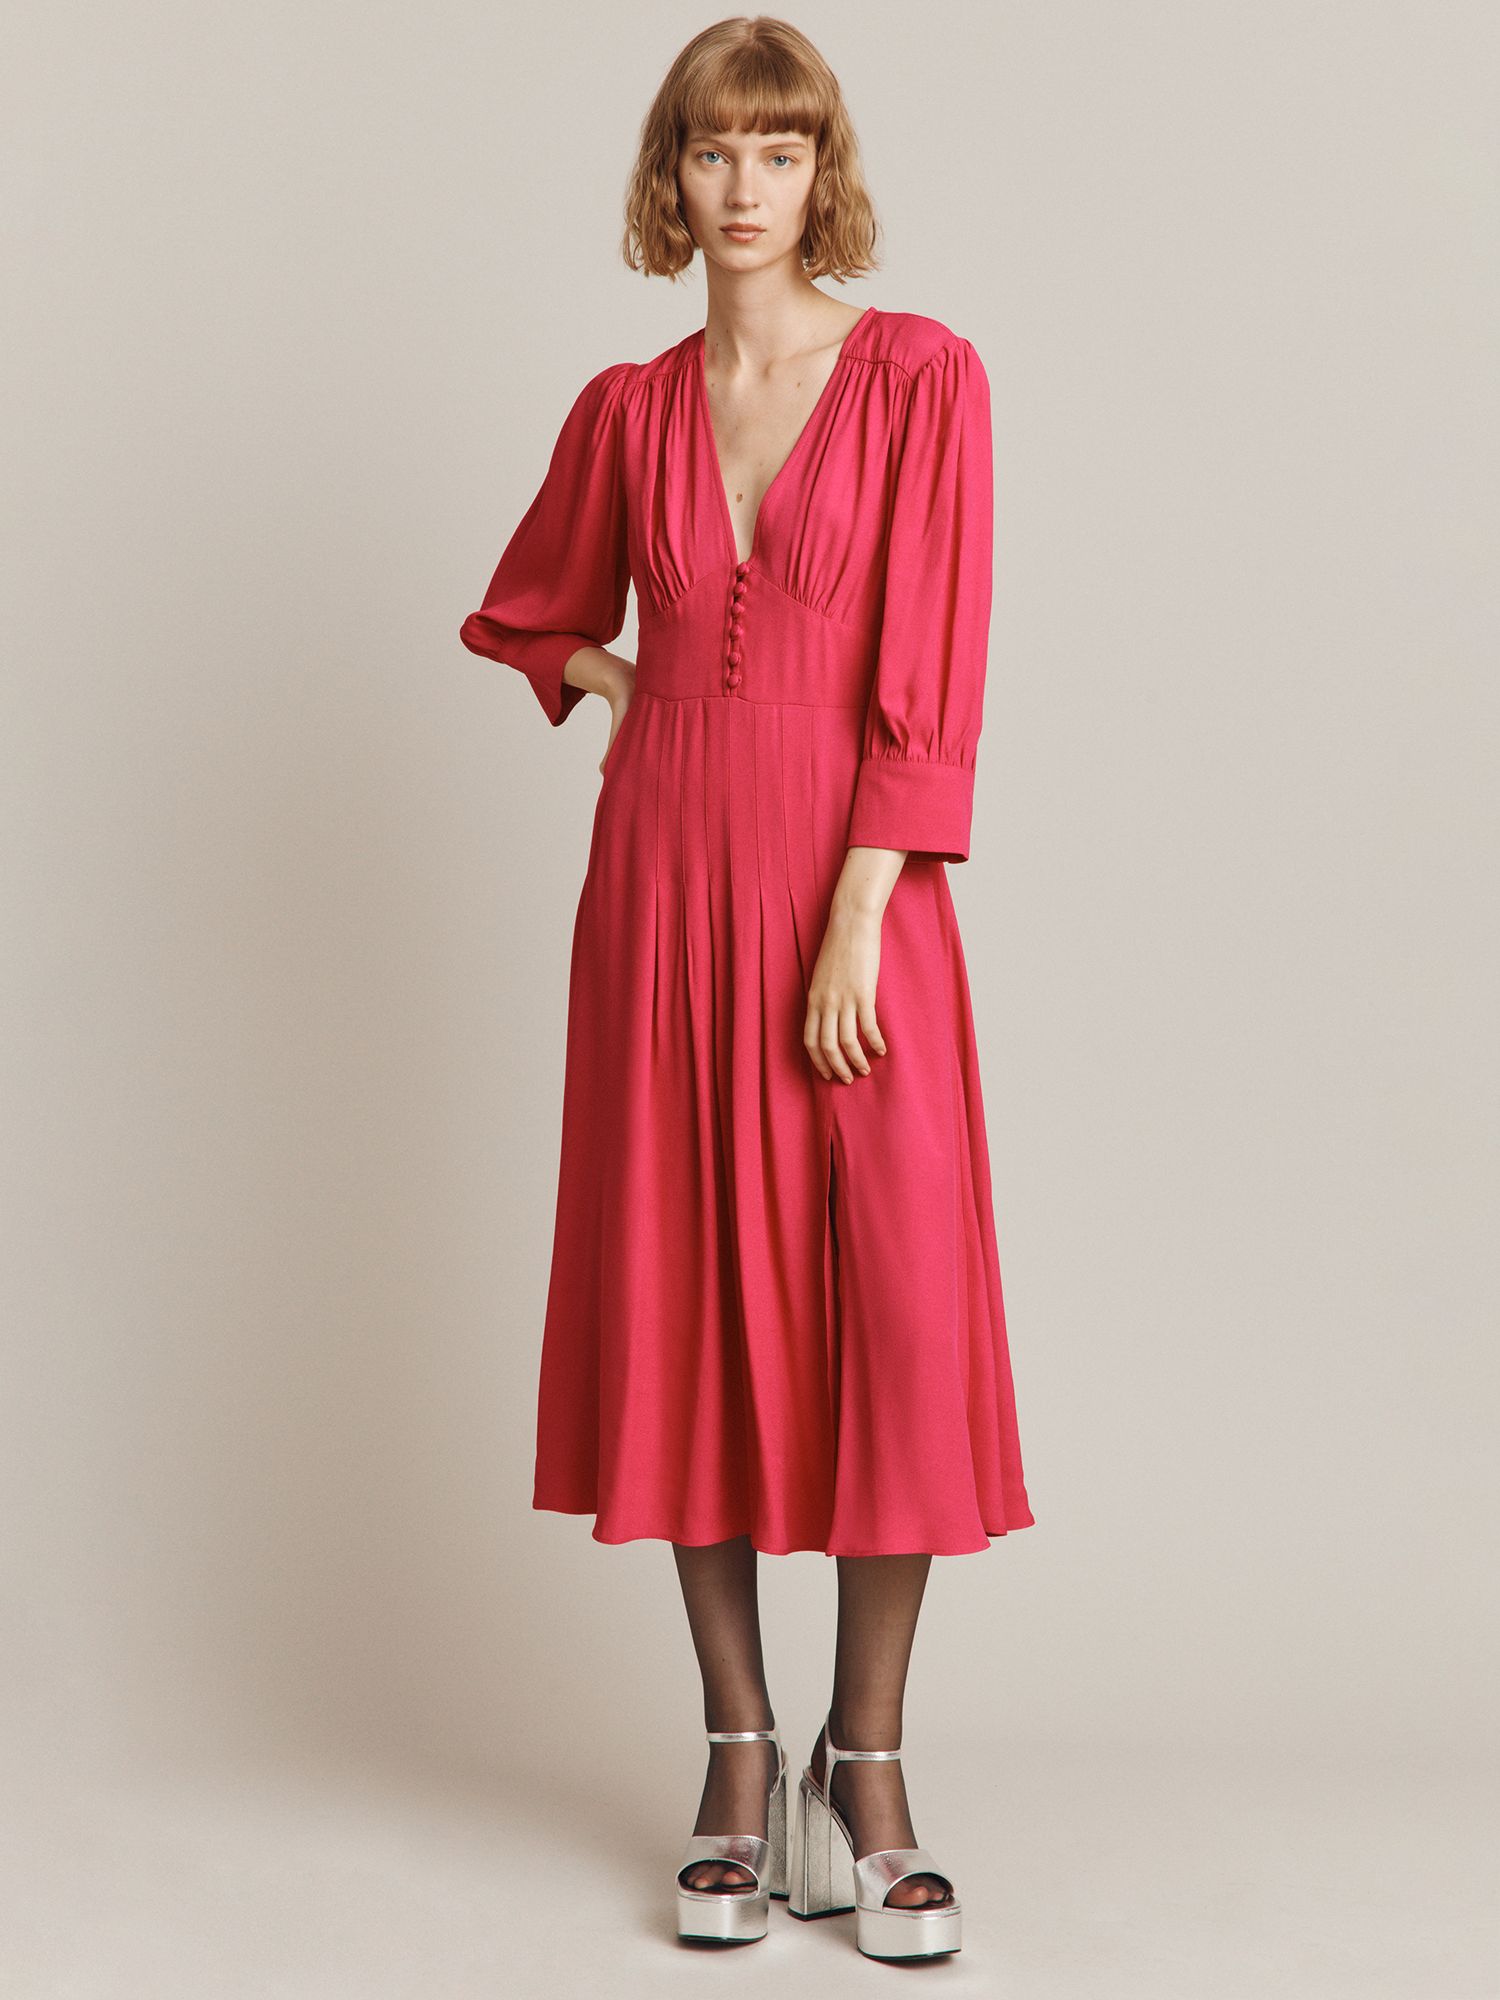 Ghost Willow Satin Midi Dress, Hot Pink at John Lewis & Partners